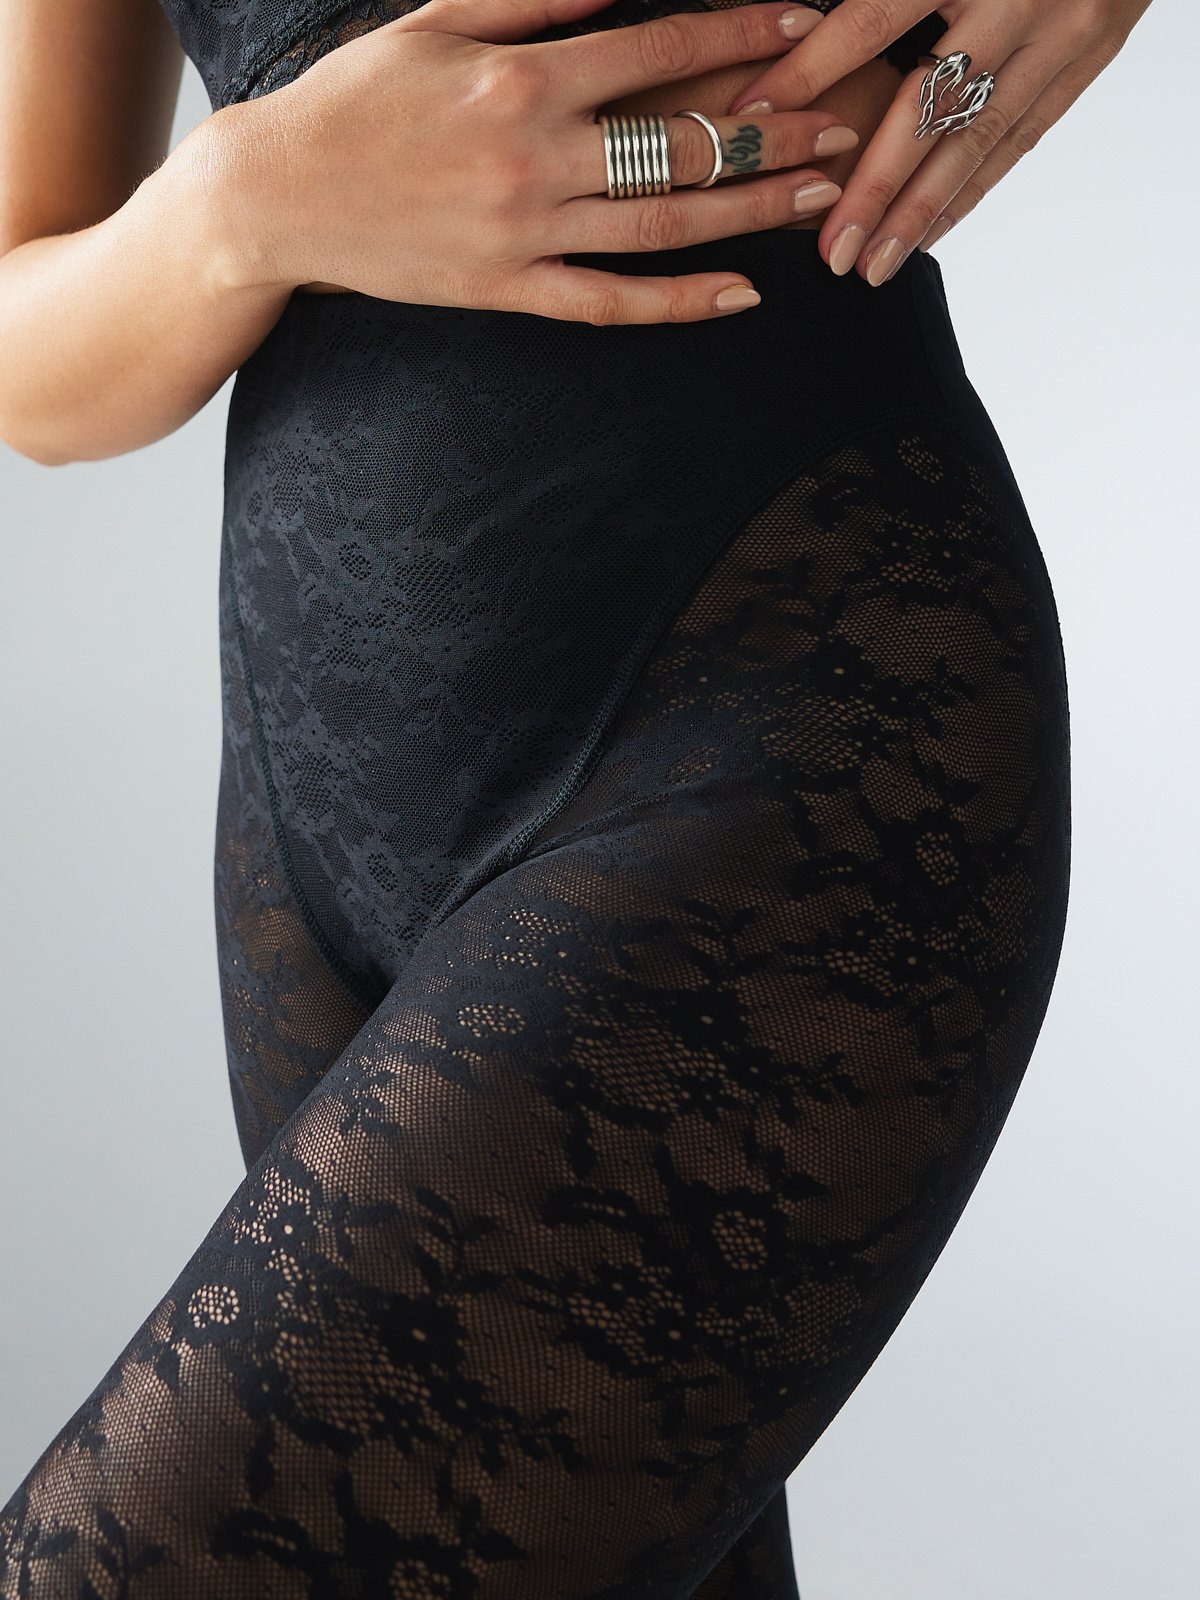 Lace Race High-Waist Legging in Black